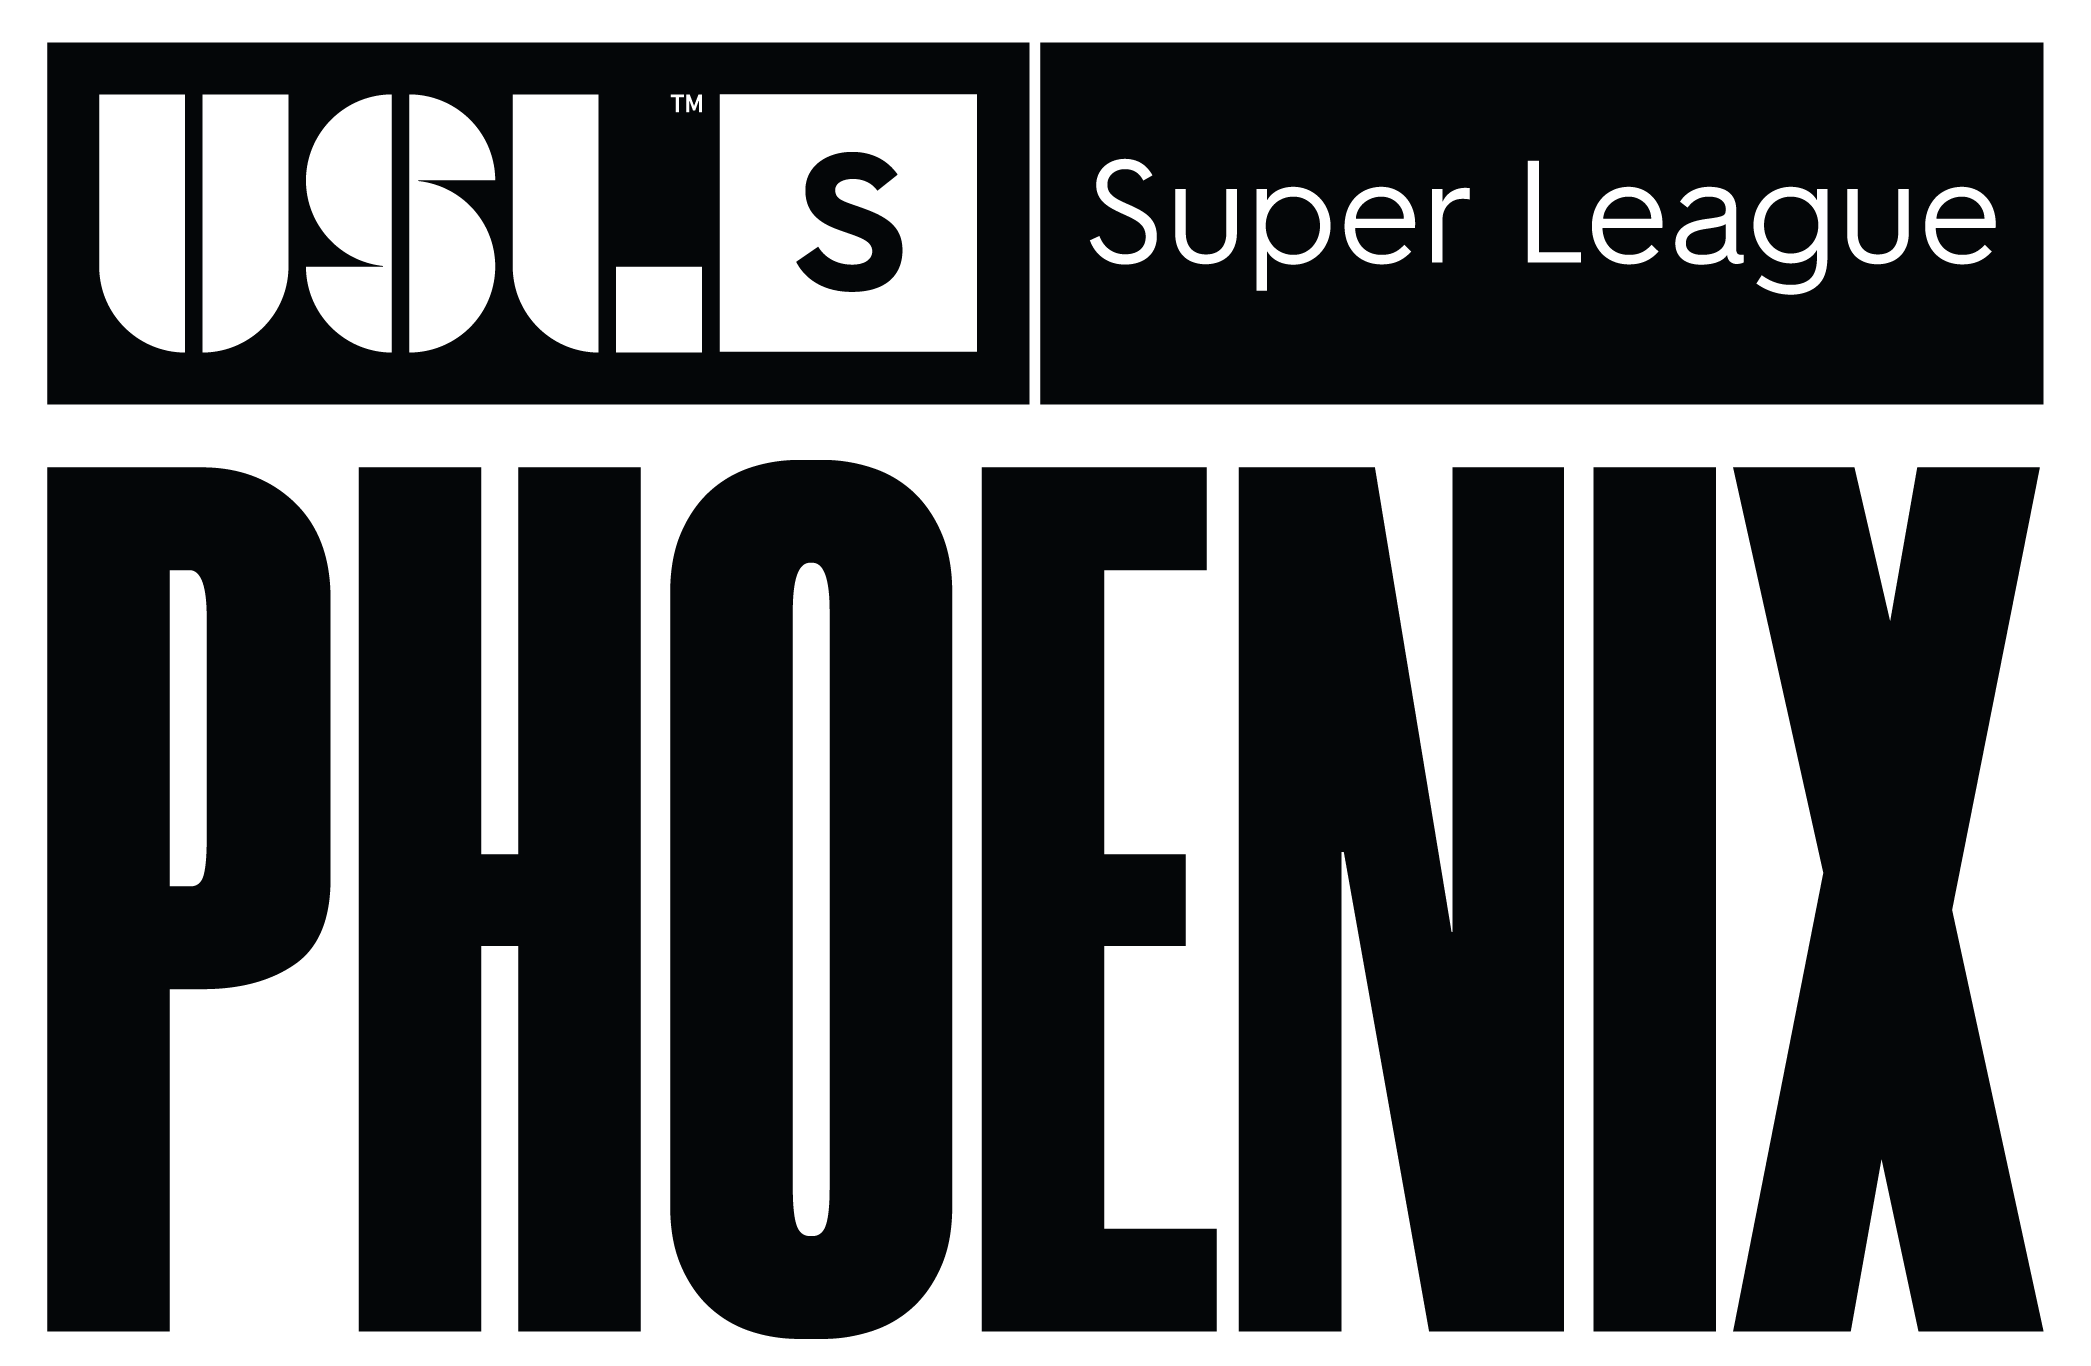 USL Super League Phoenix logo